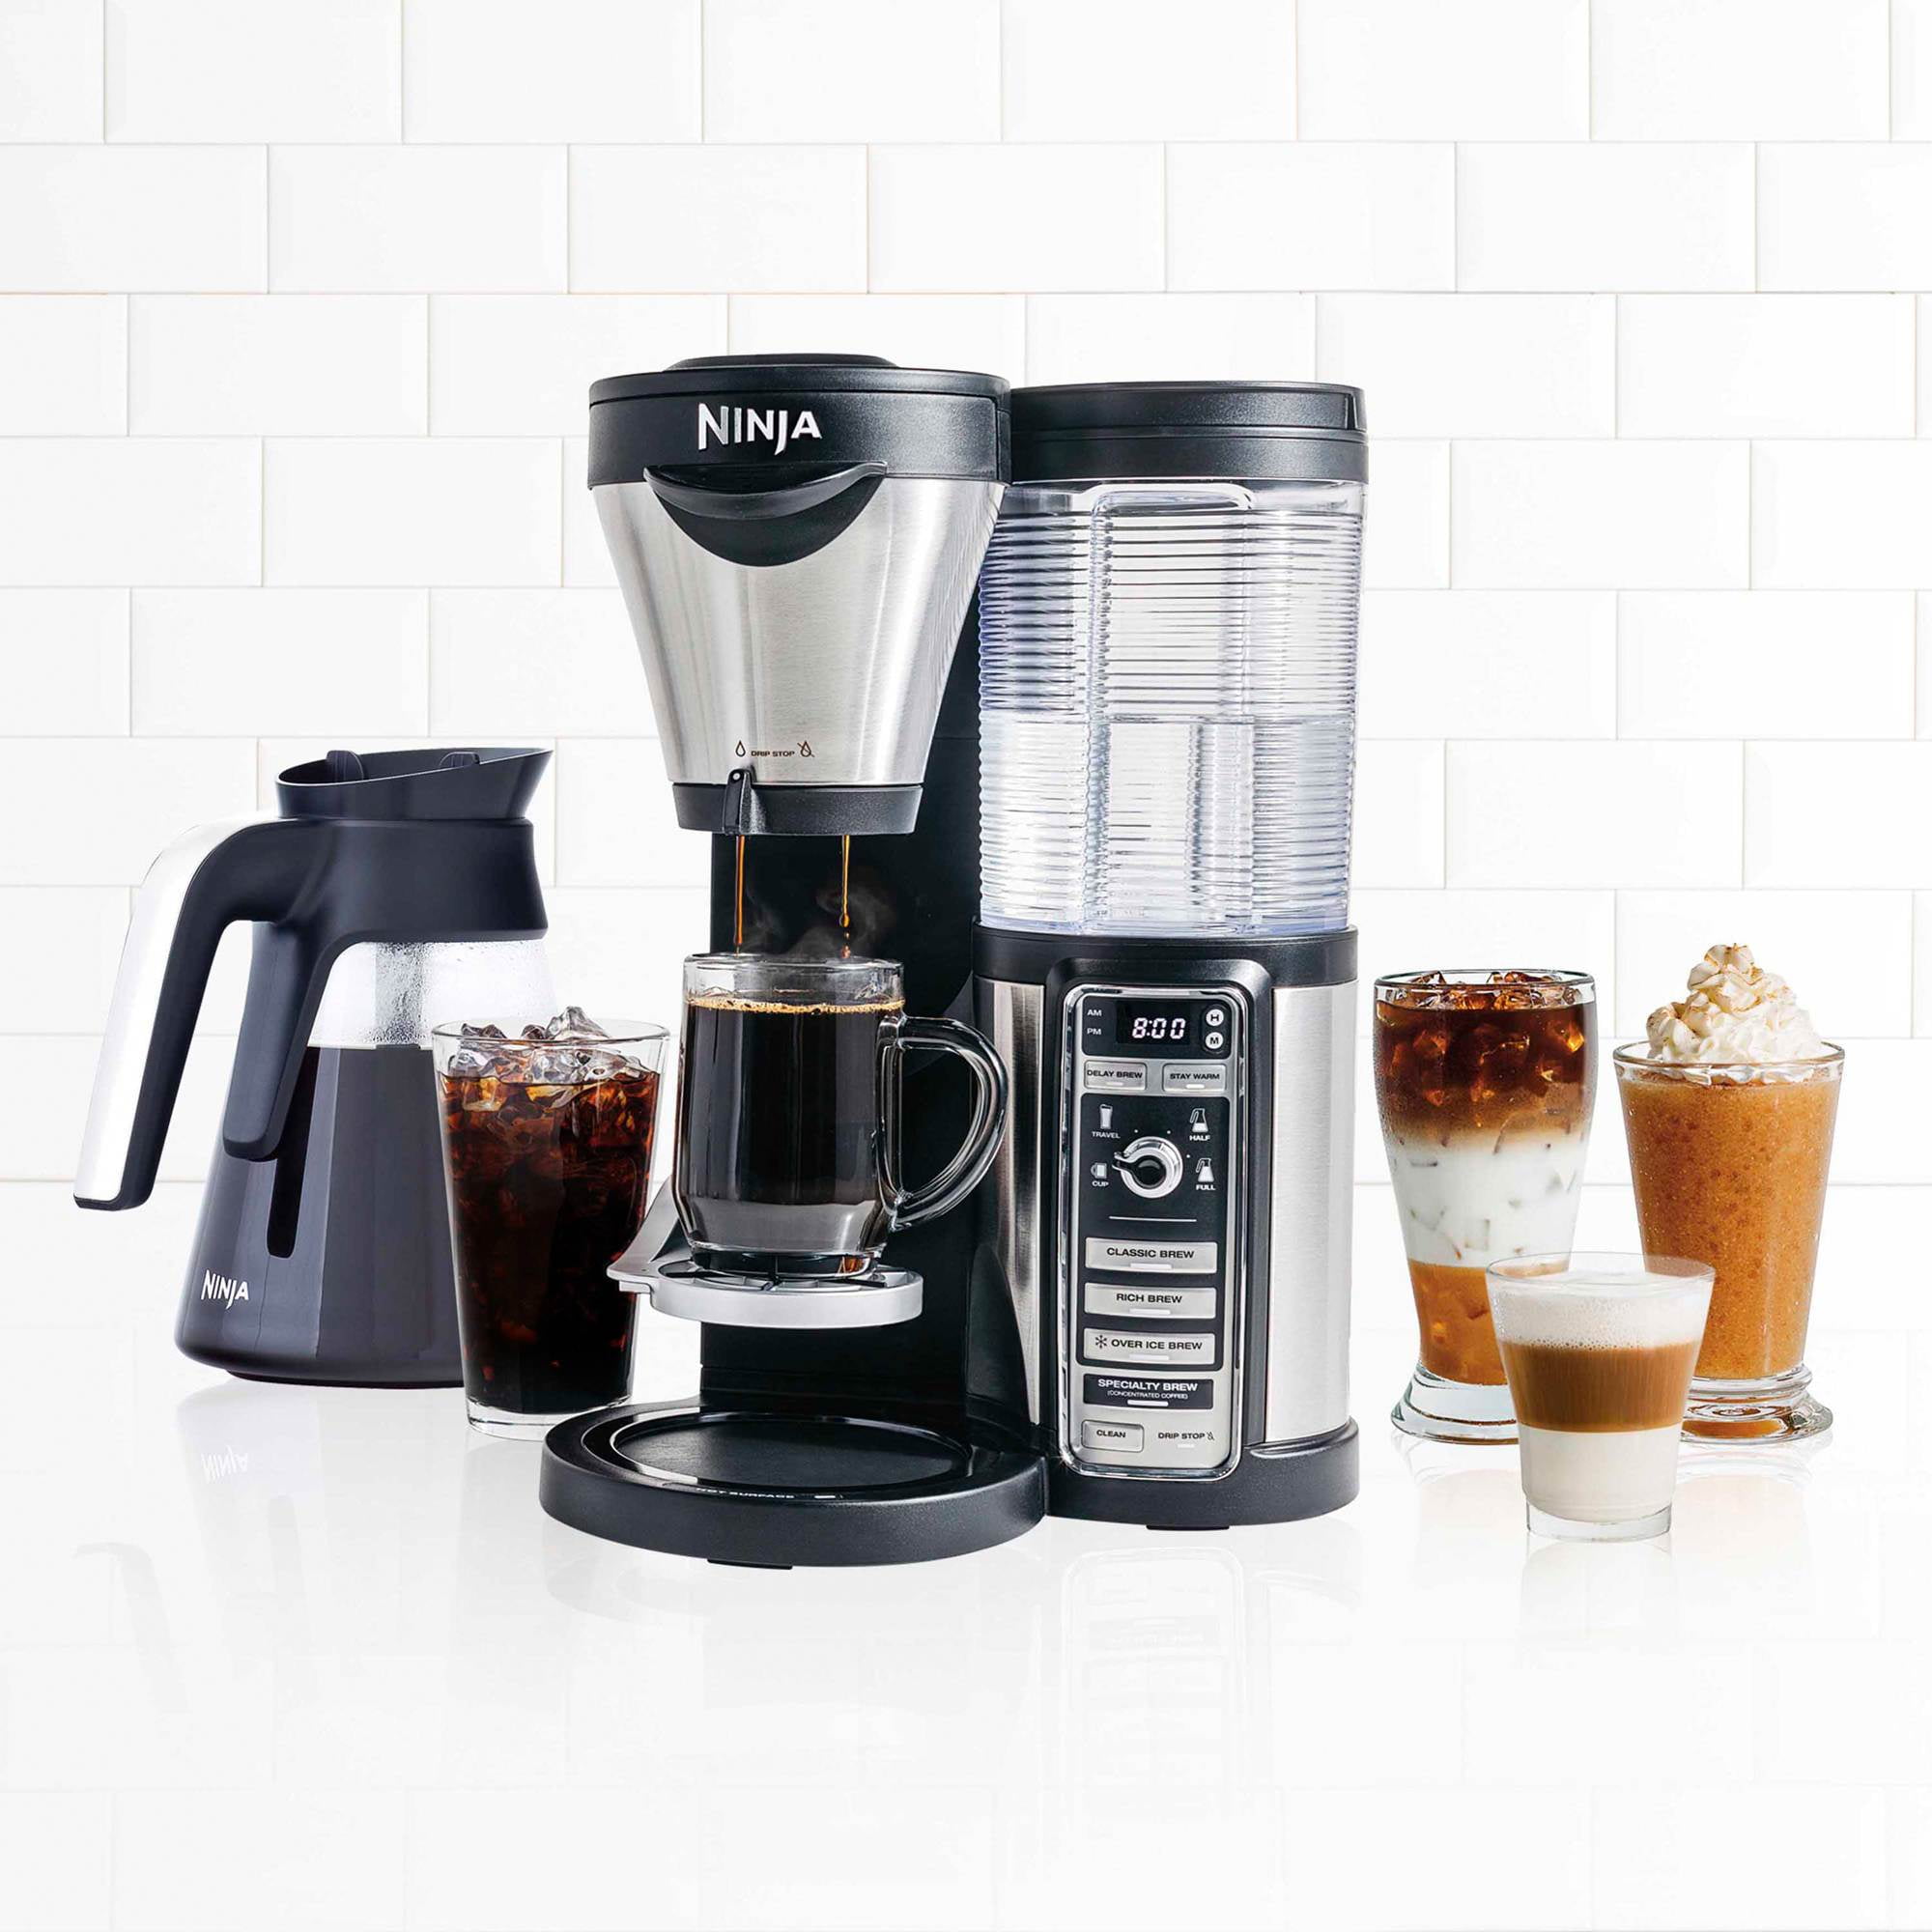 Keep calm and drink homemade cappuccinos. ☕️ The Ninja Single-Serve G, Ninja  Coffee Maker